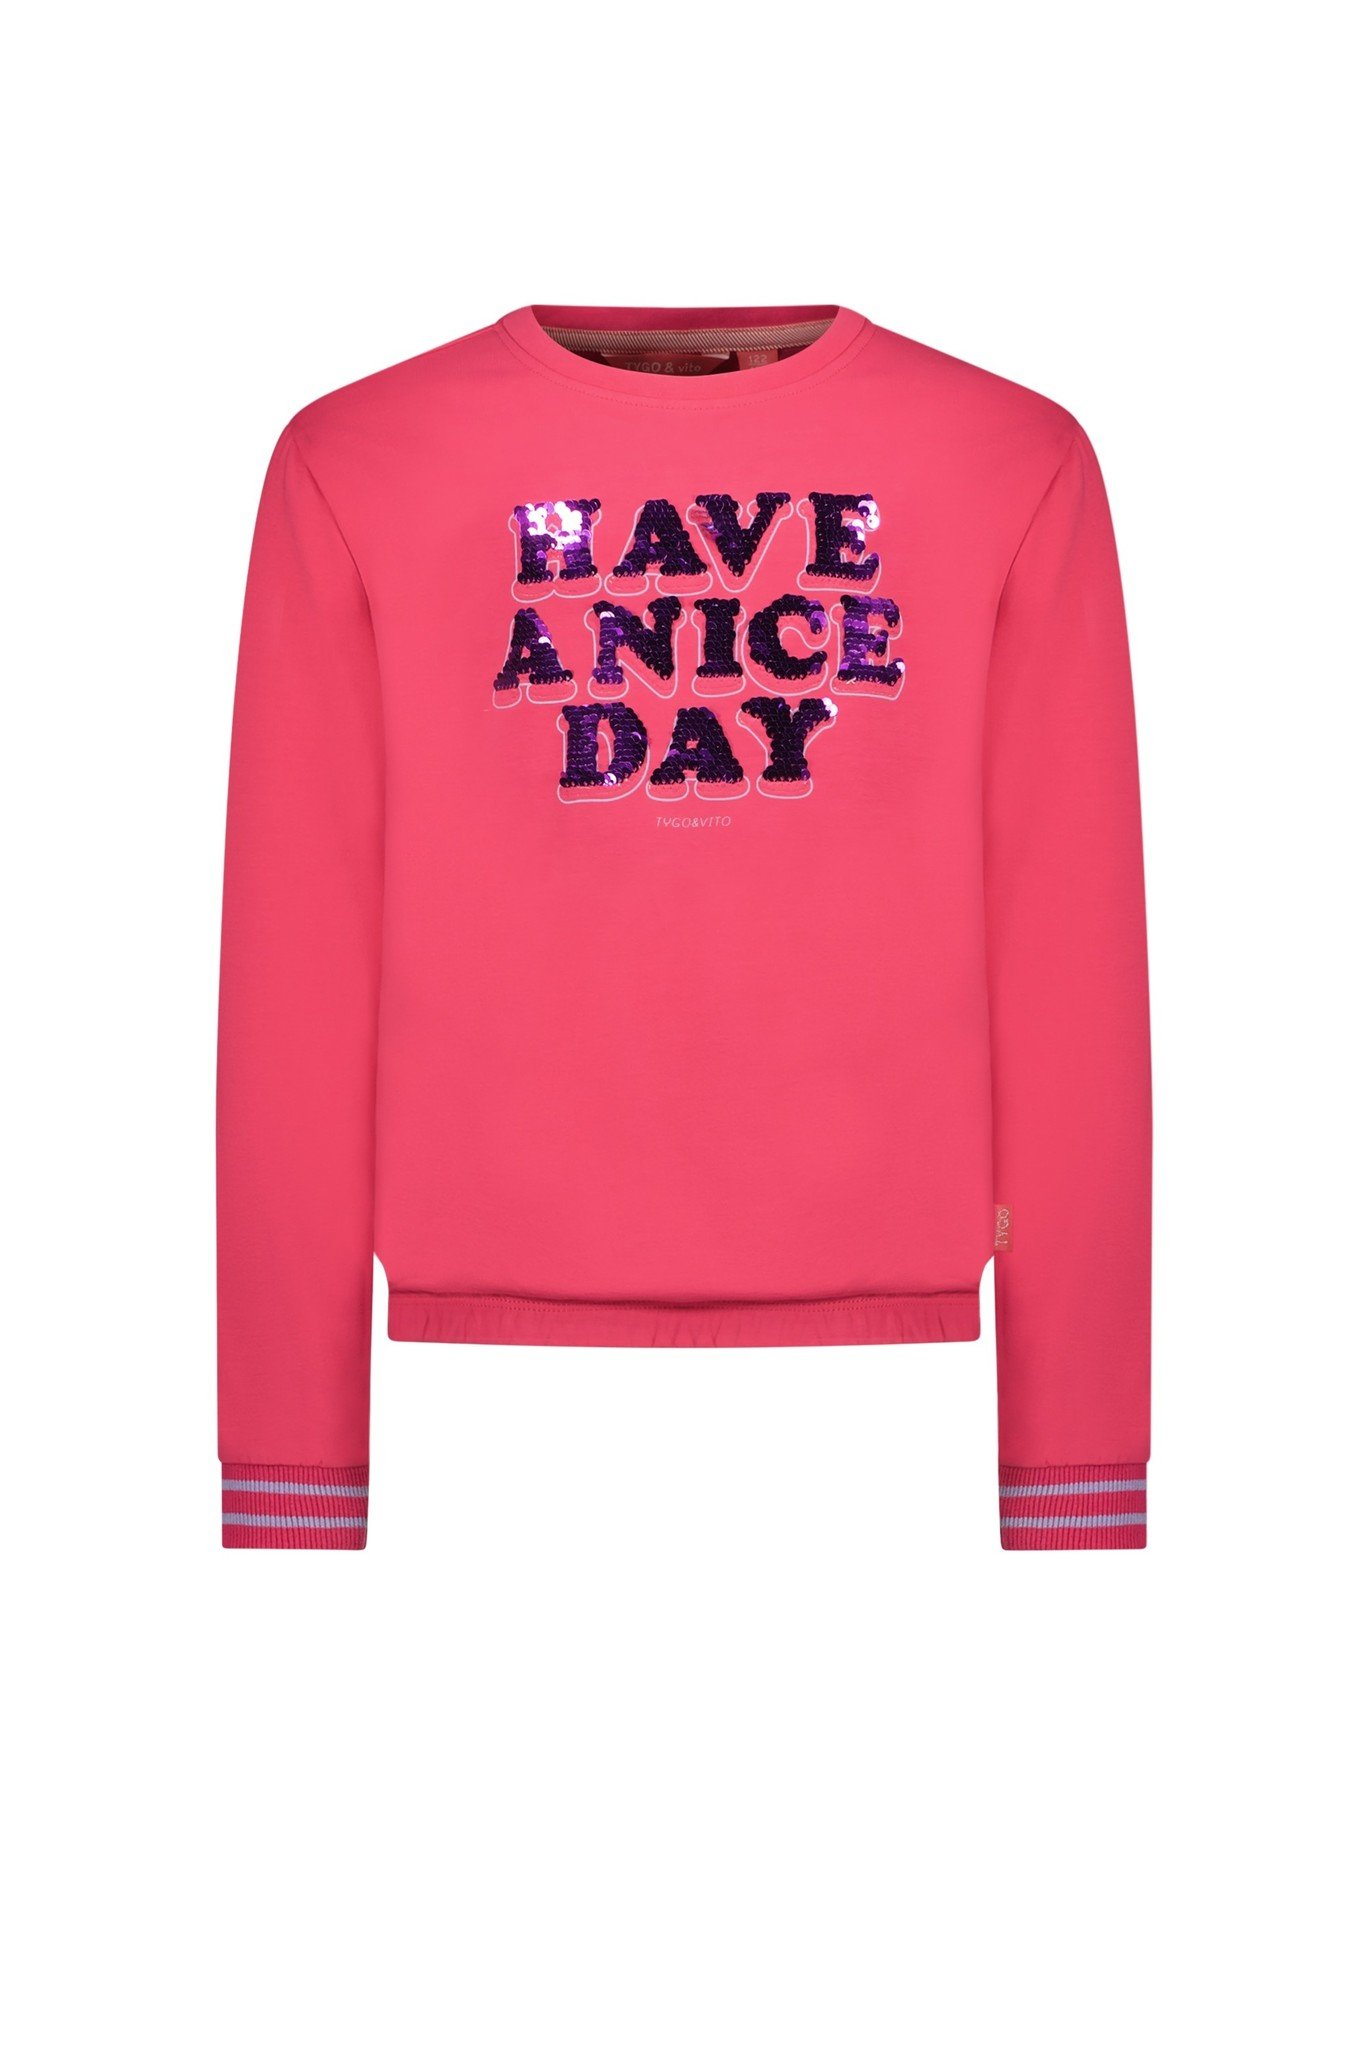 Tygo & Vito Meisjes sweater - Vibrant roze